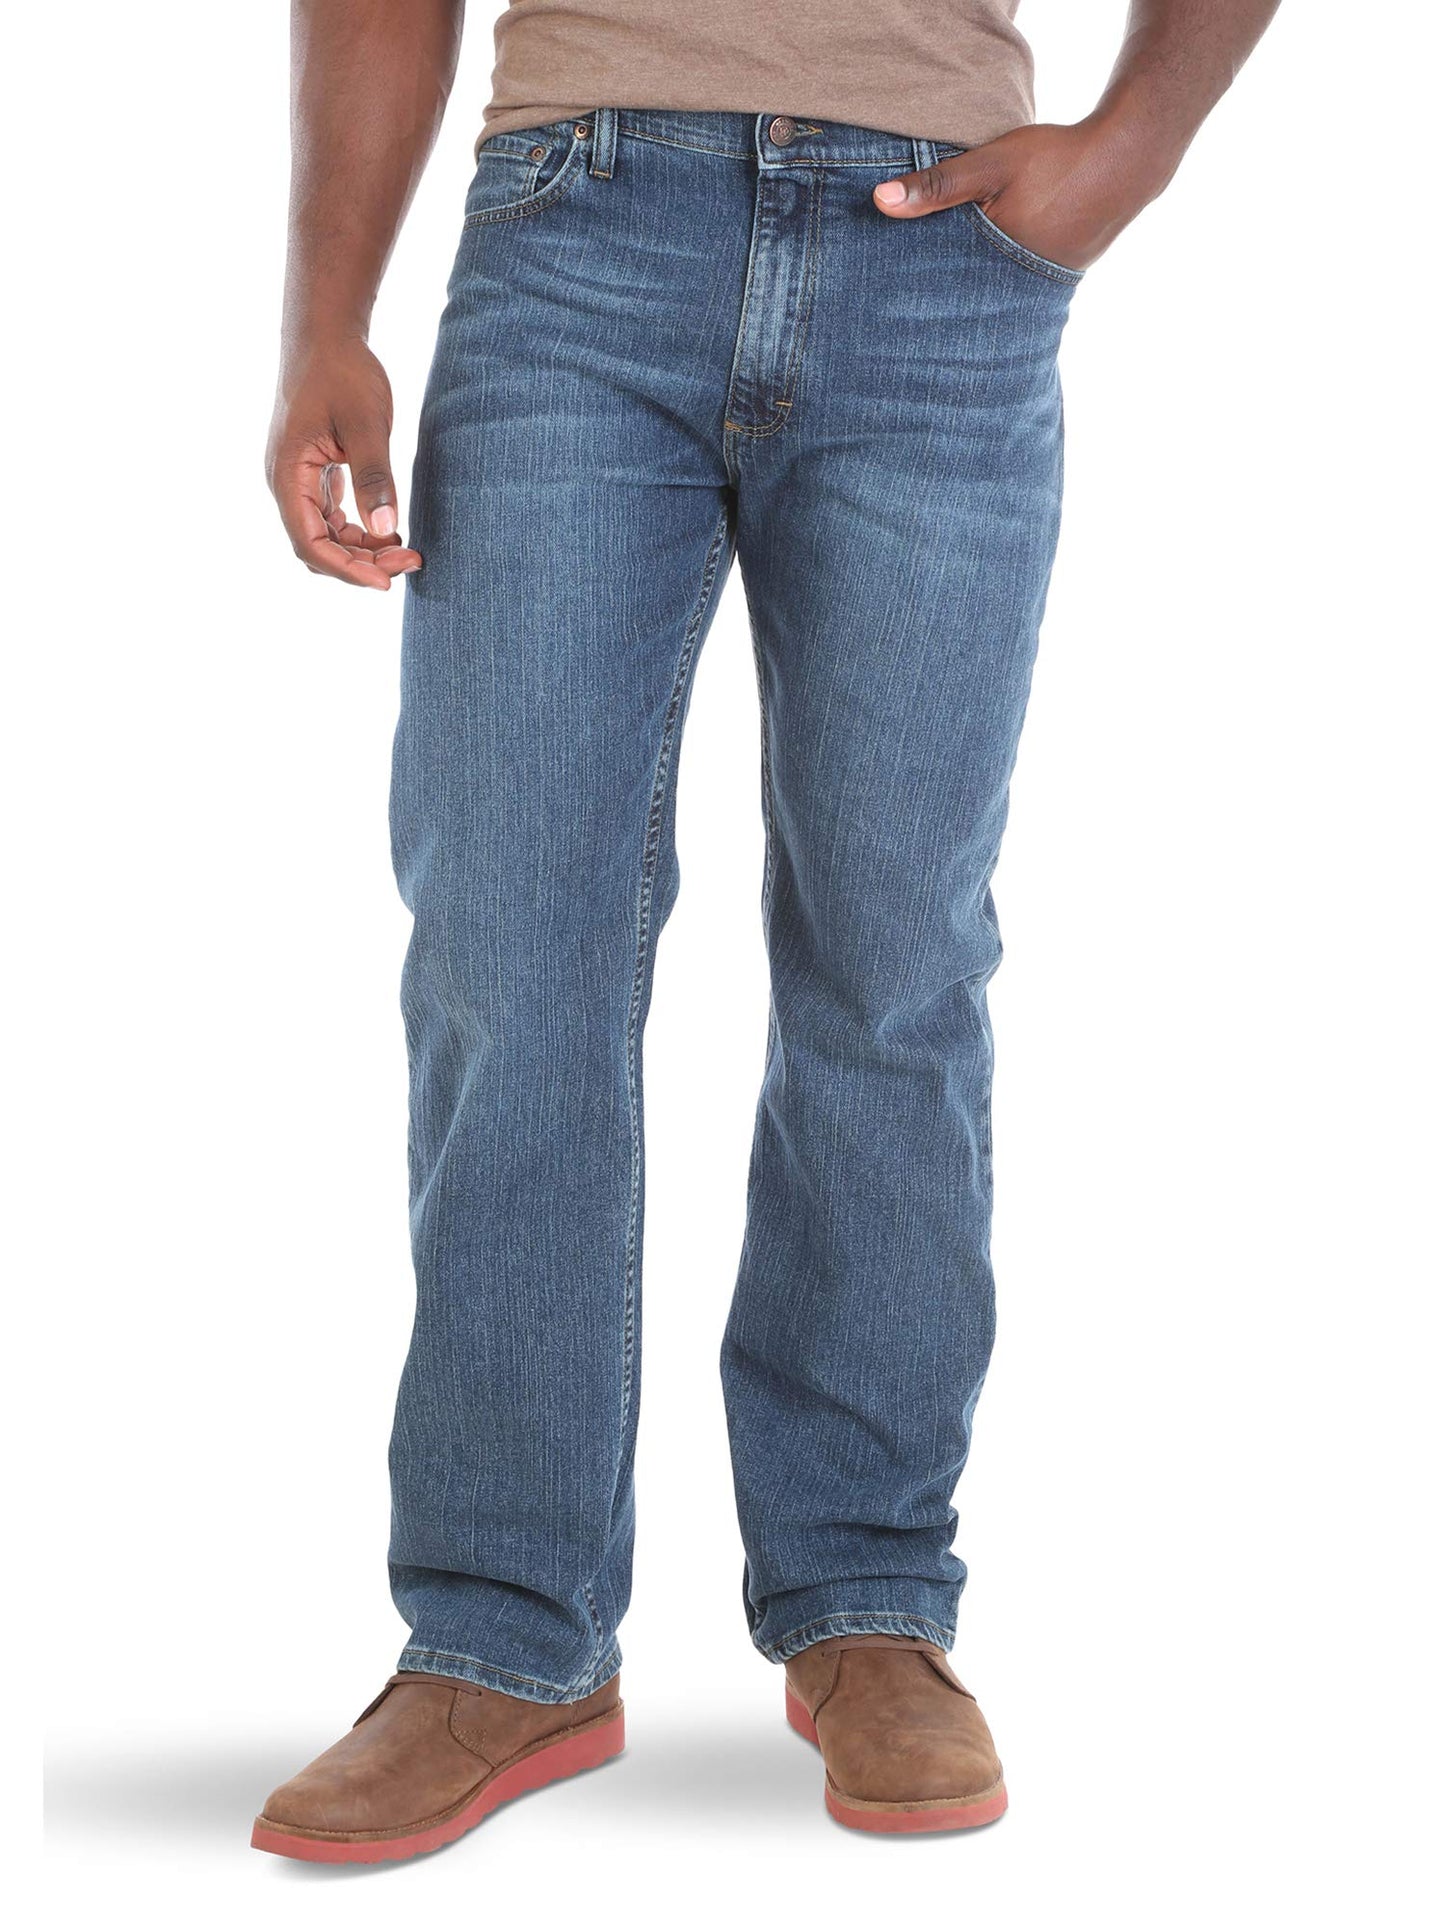 Wrangler Authentics Men's Regular Fit Comfort Flex Waist Jean, Blue Ocean, 30W x 32L